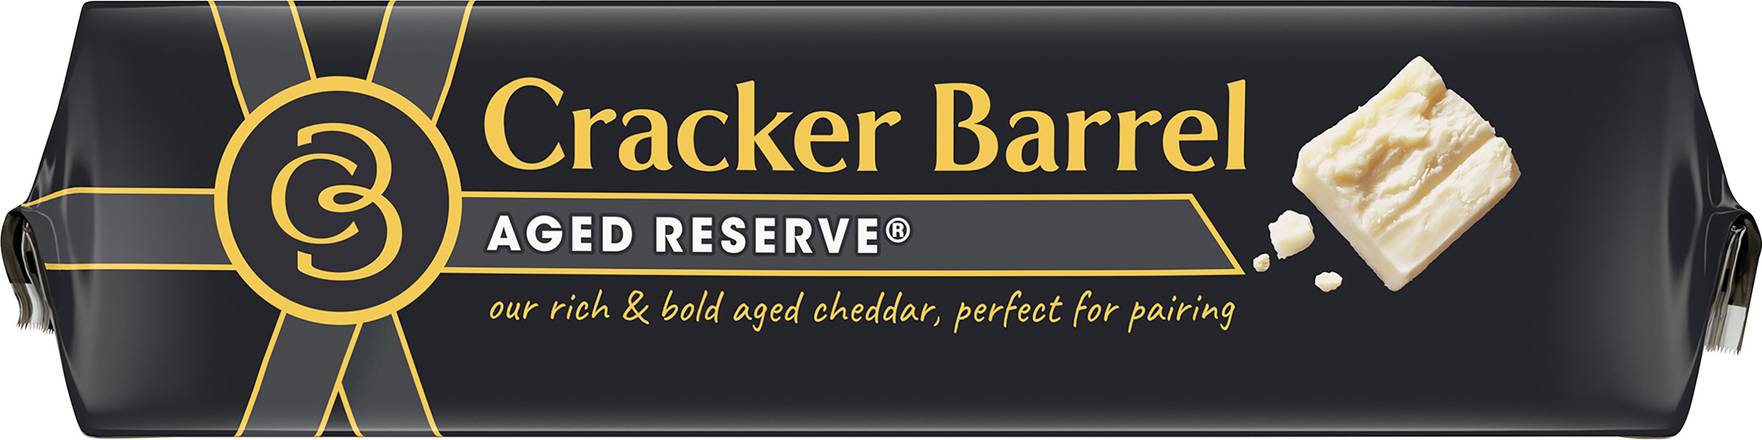 Cracker Barrel Aged Reserve Cheddar Cheese Block